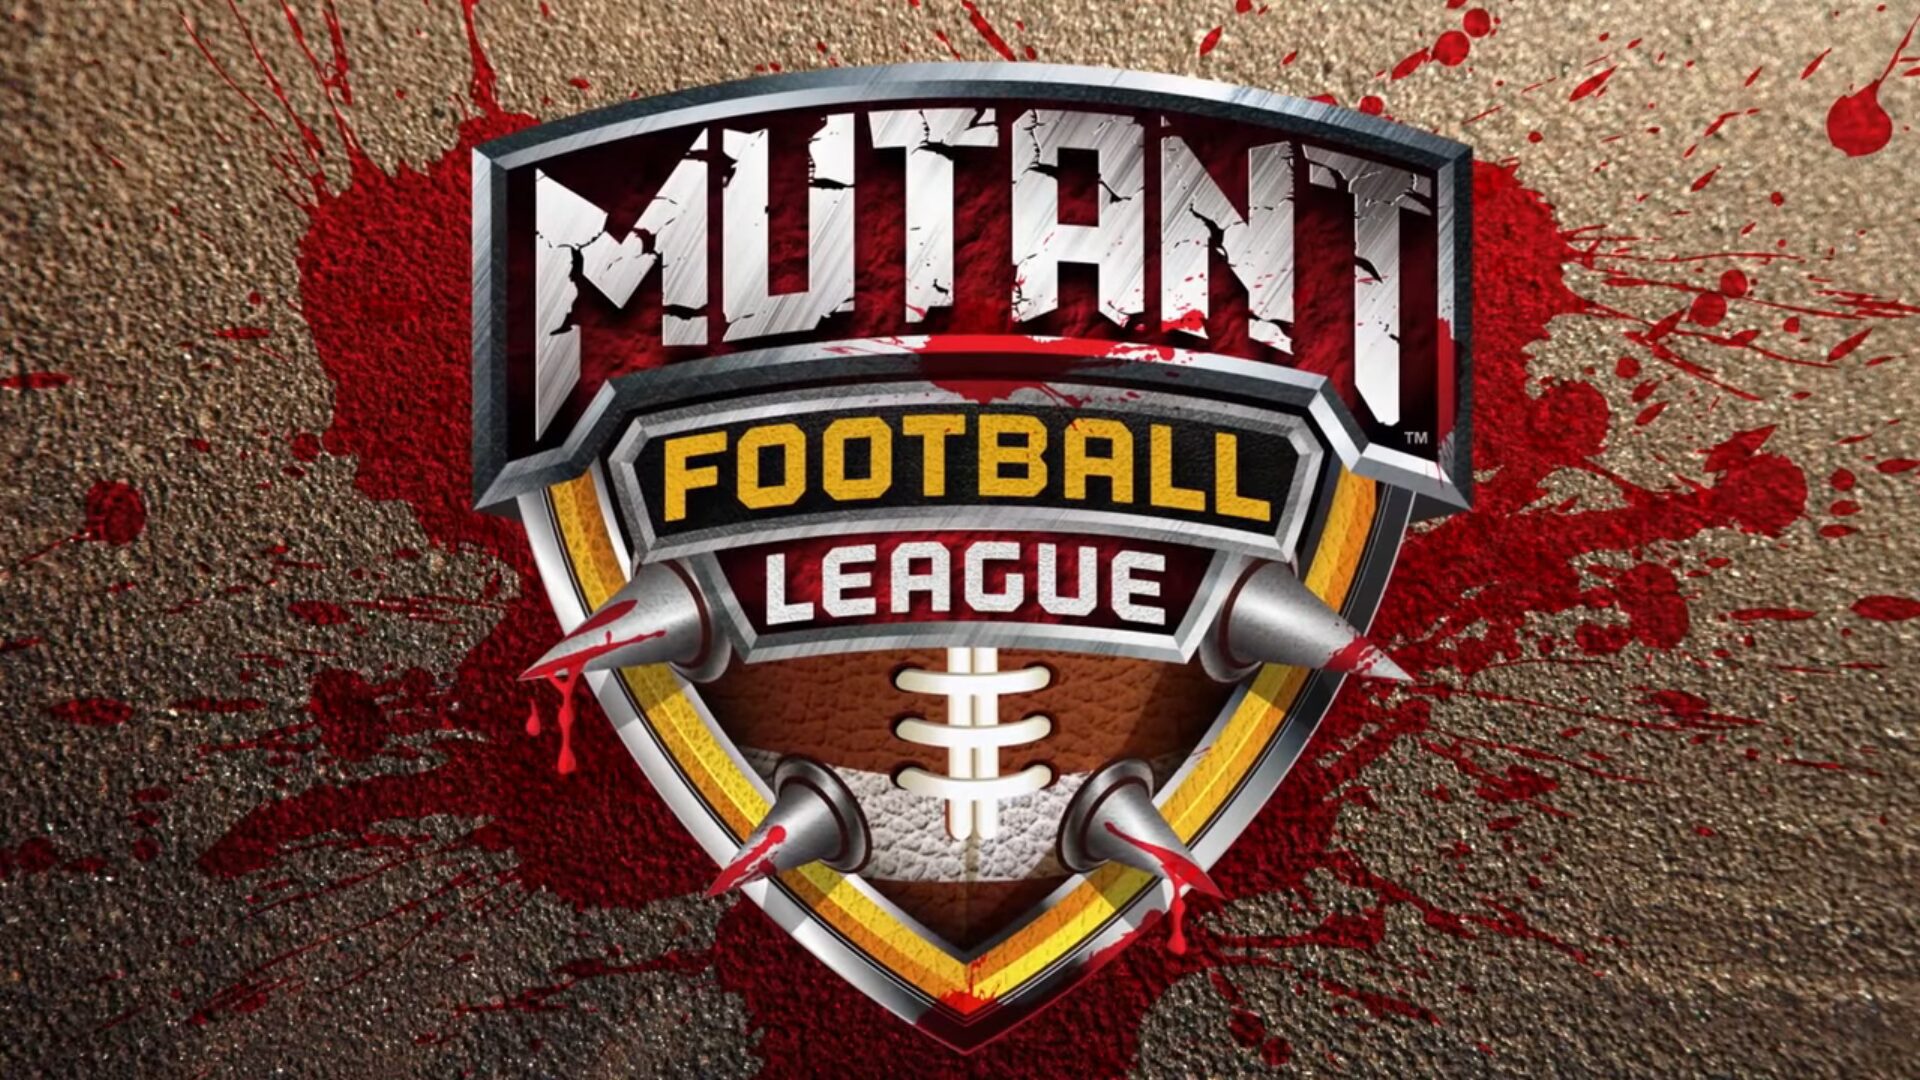 Mutant Football League Promises “More Gore”